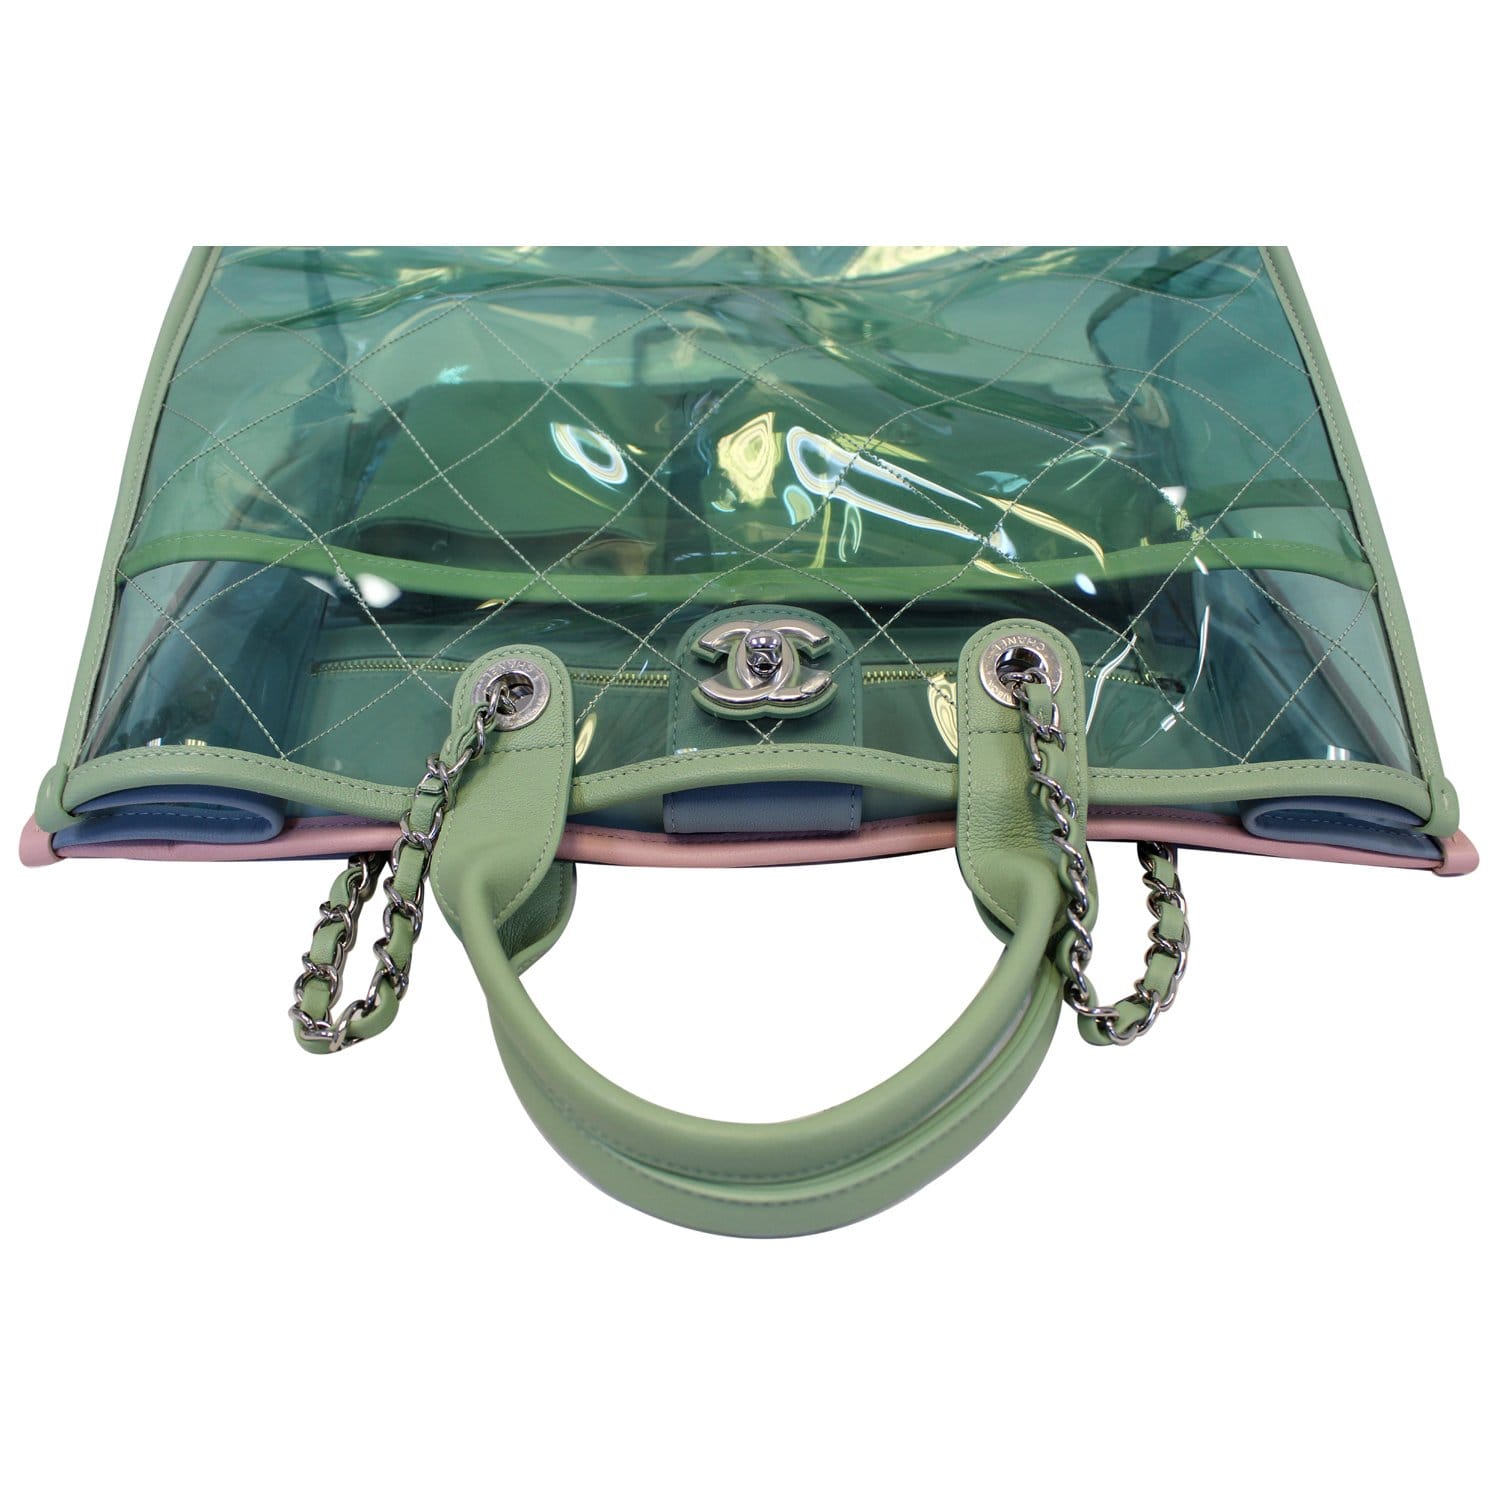 Coco Splash Medium Flap Bag Multicoloured with SHW